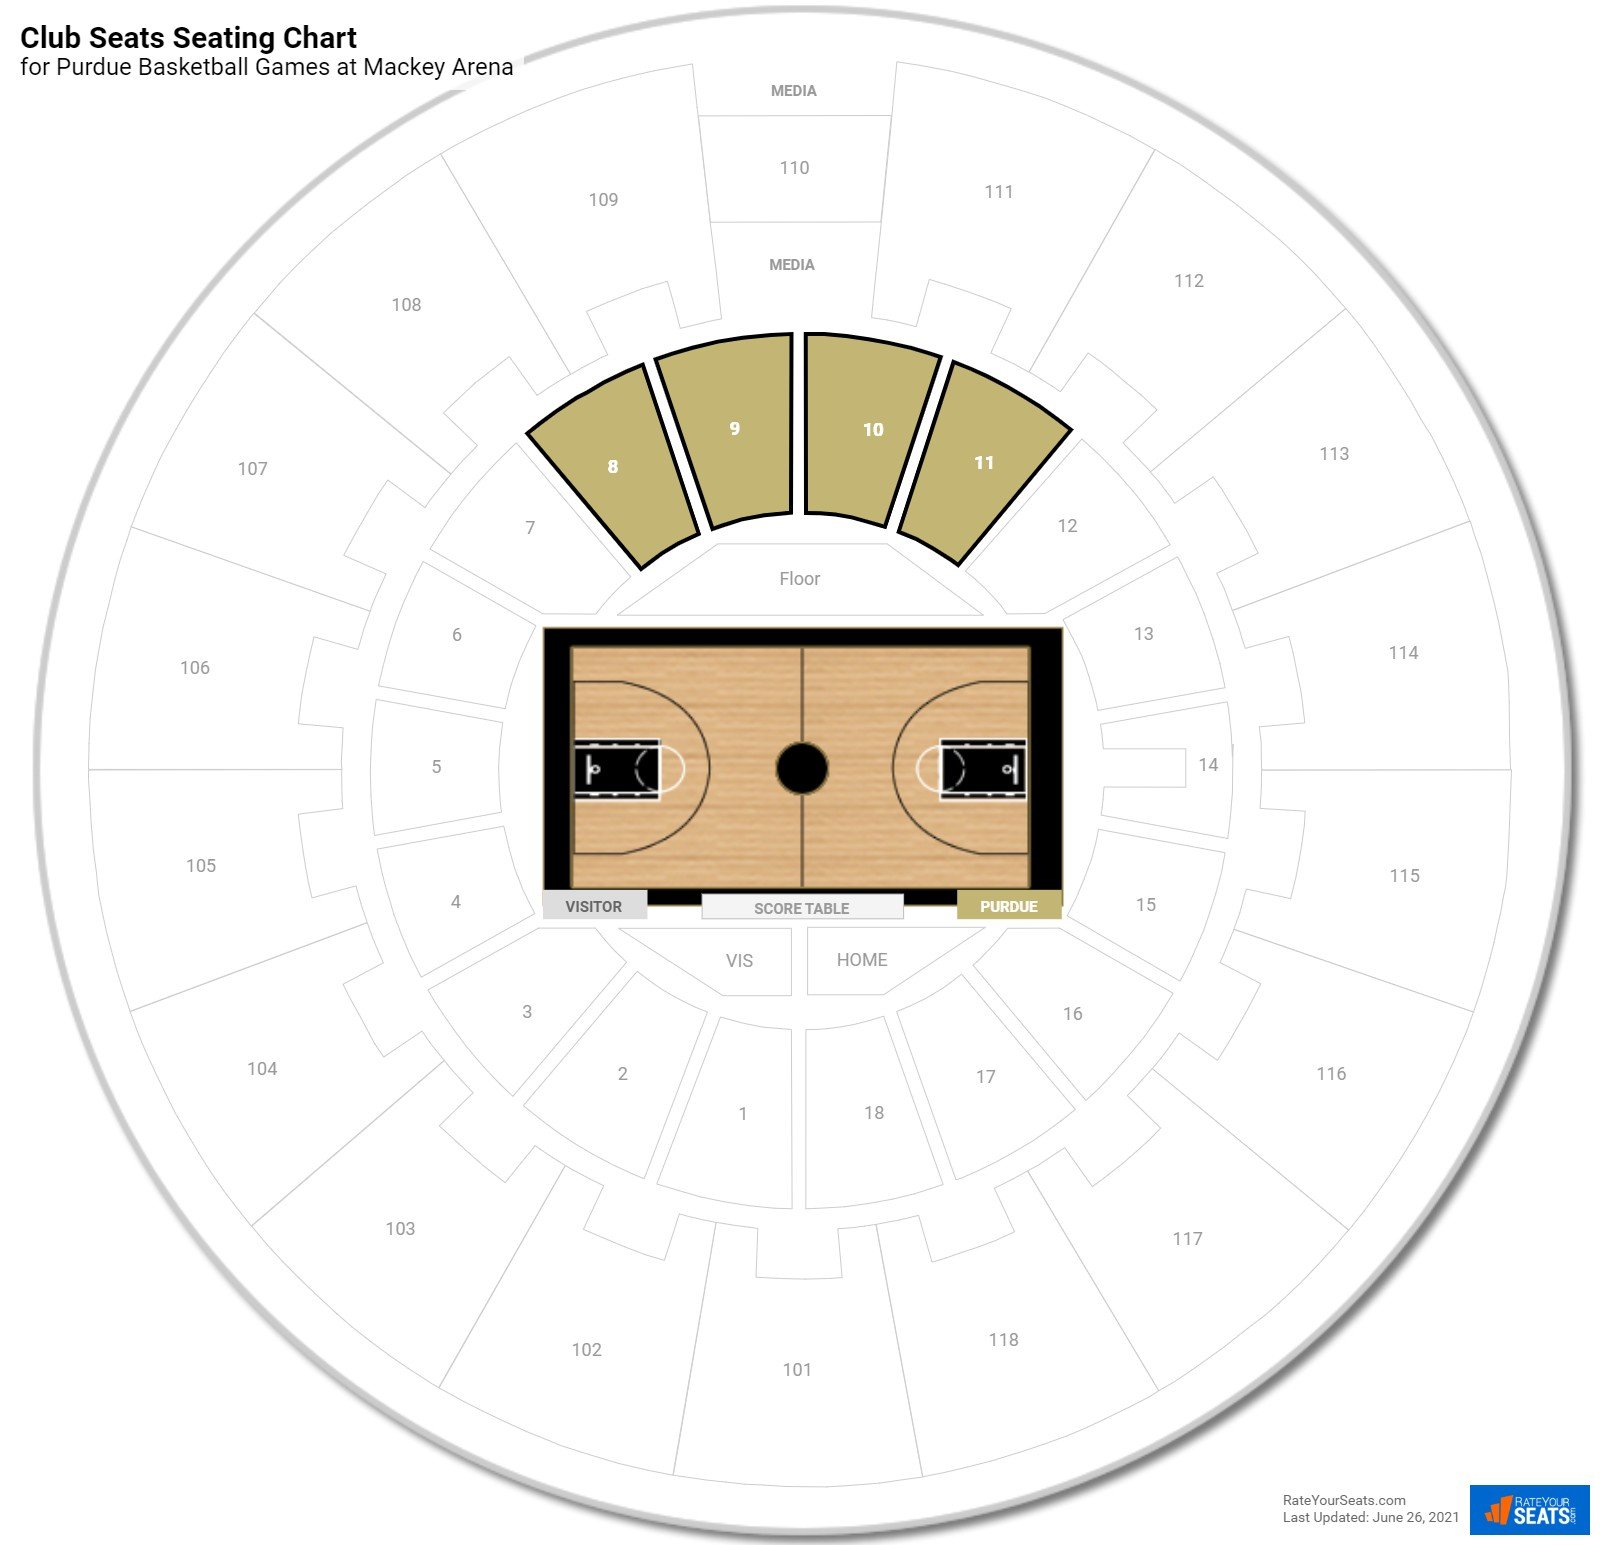 Purdue Club Seats Seating Chart at Mackey Arena